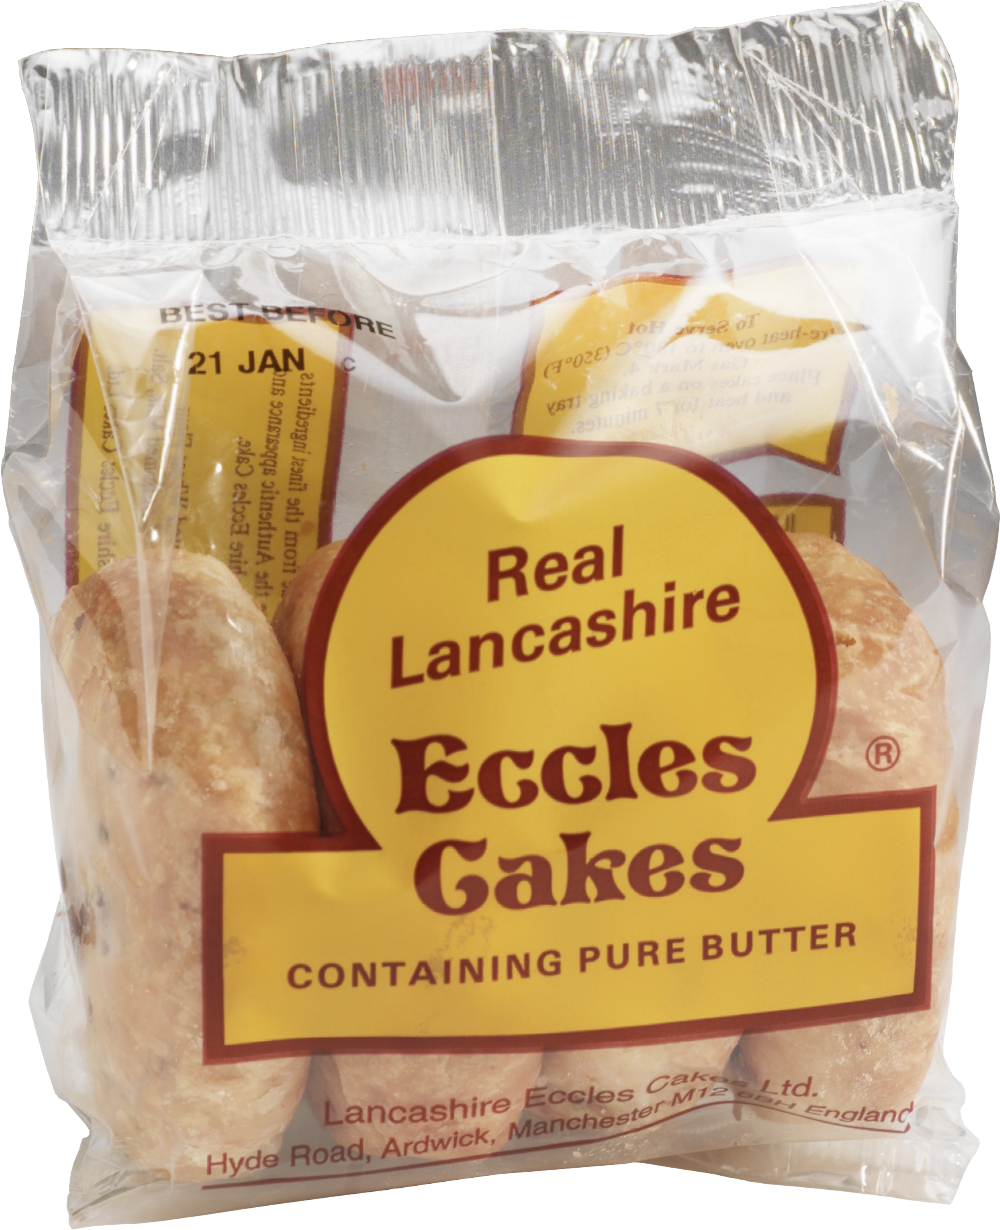 LANCASHIRE Eccles Cakes